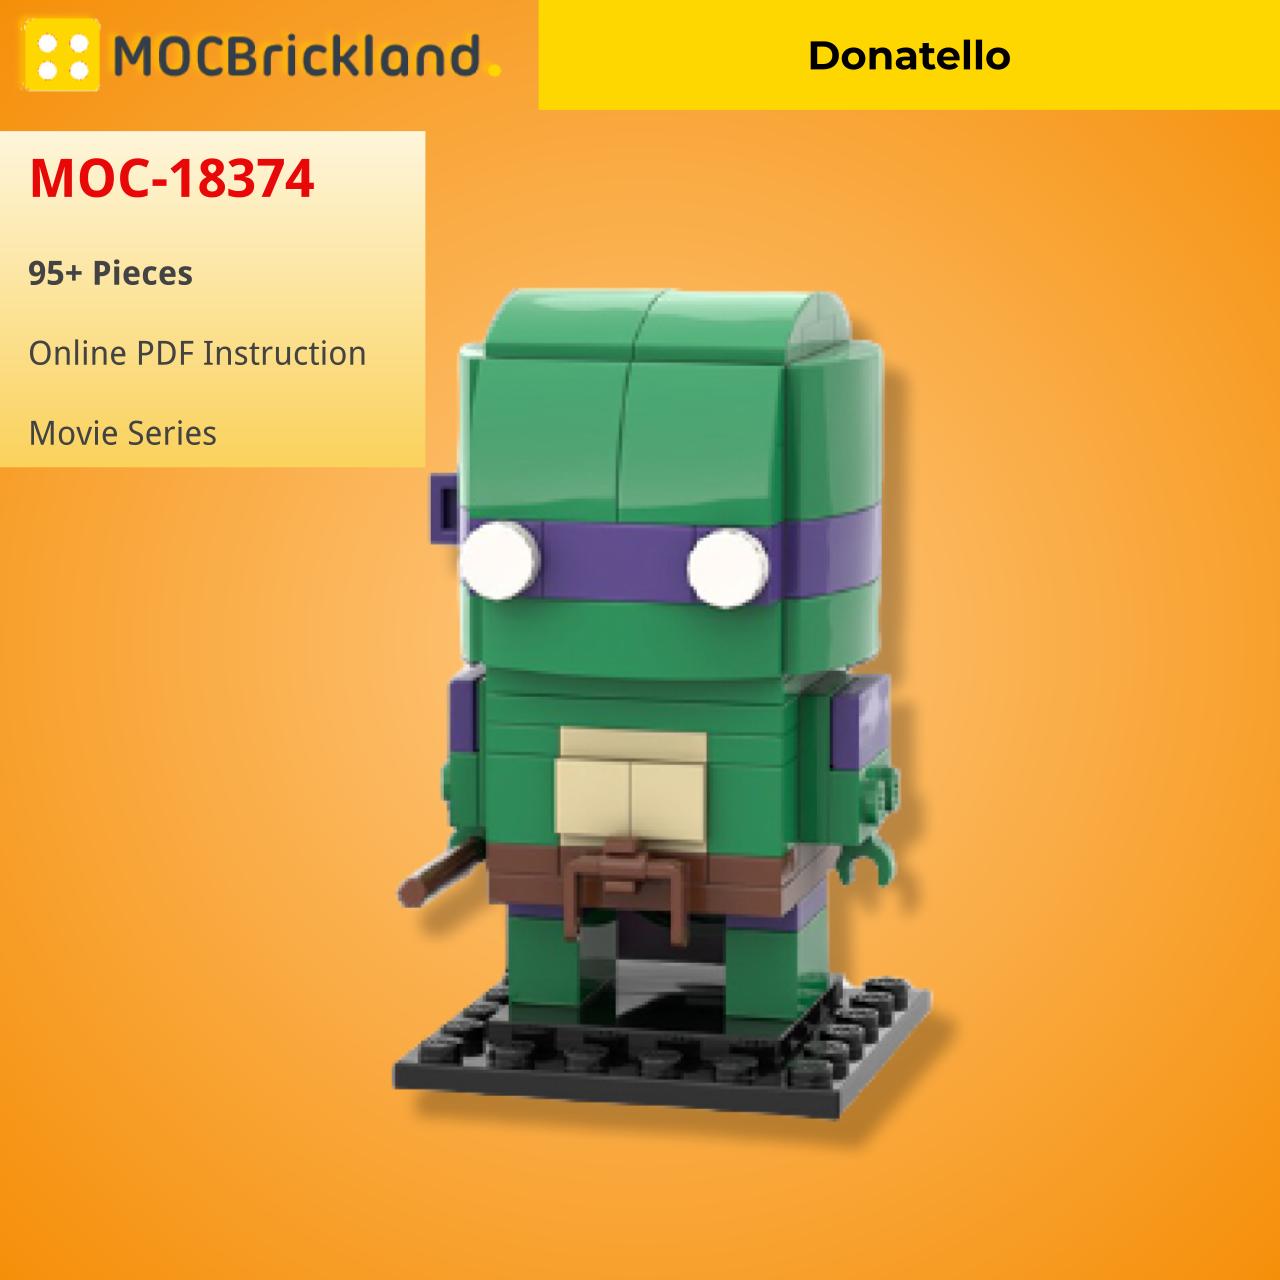 MOCBRICKLAND MOC-18374 Brickheadz - Donatello